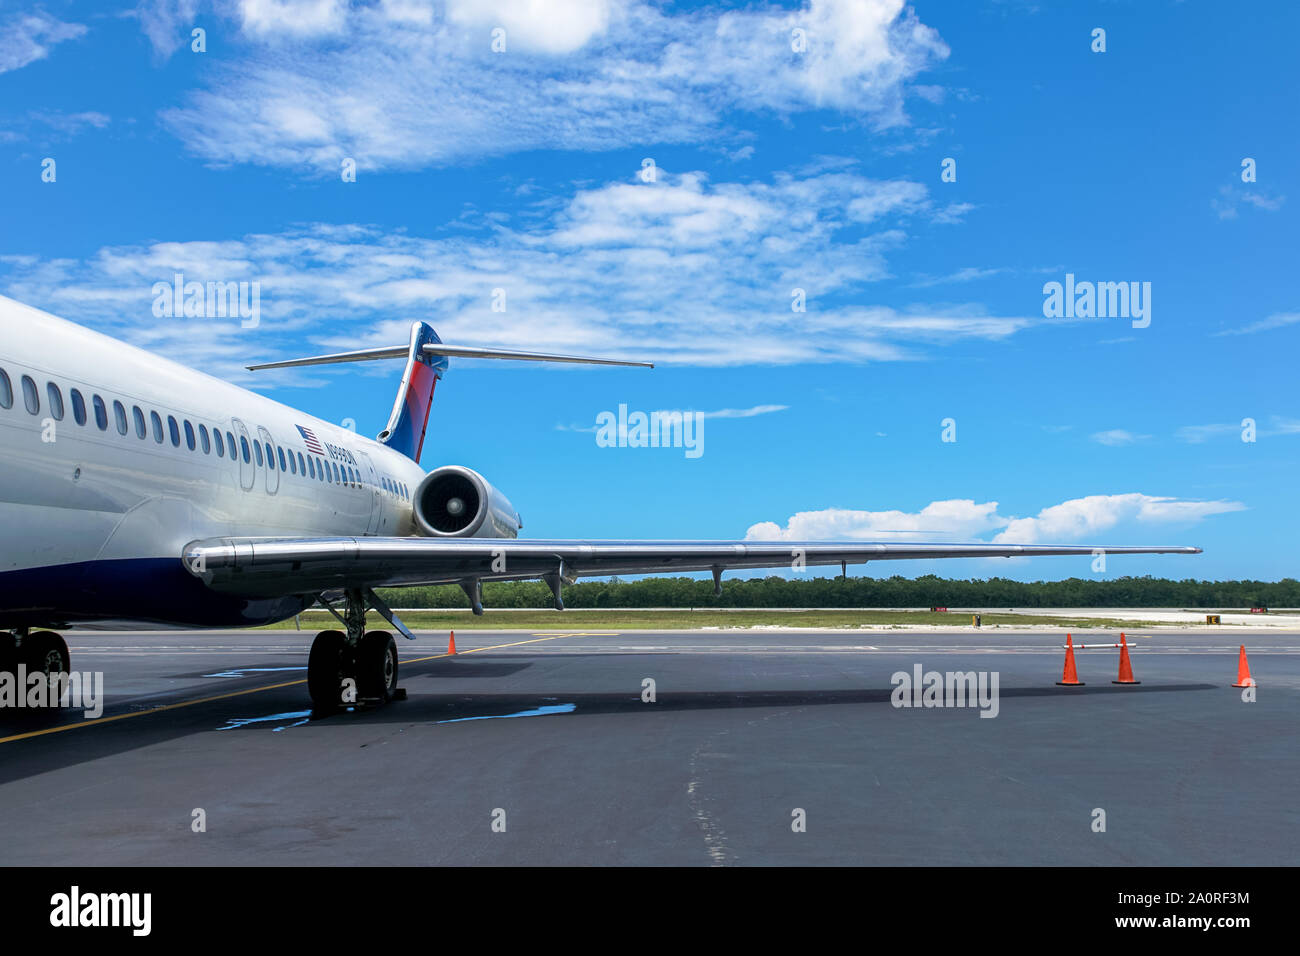 Cozumel, Mexiko - Juli 19, 2016: Ein amerikanisches Flugzeug erwartet die Passagiere in Cozumel, Mexiko. Stockfoto